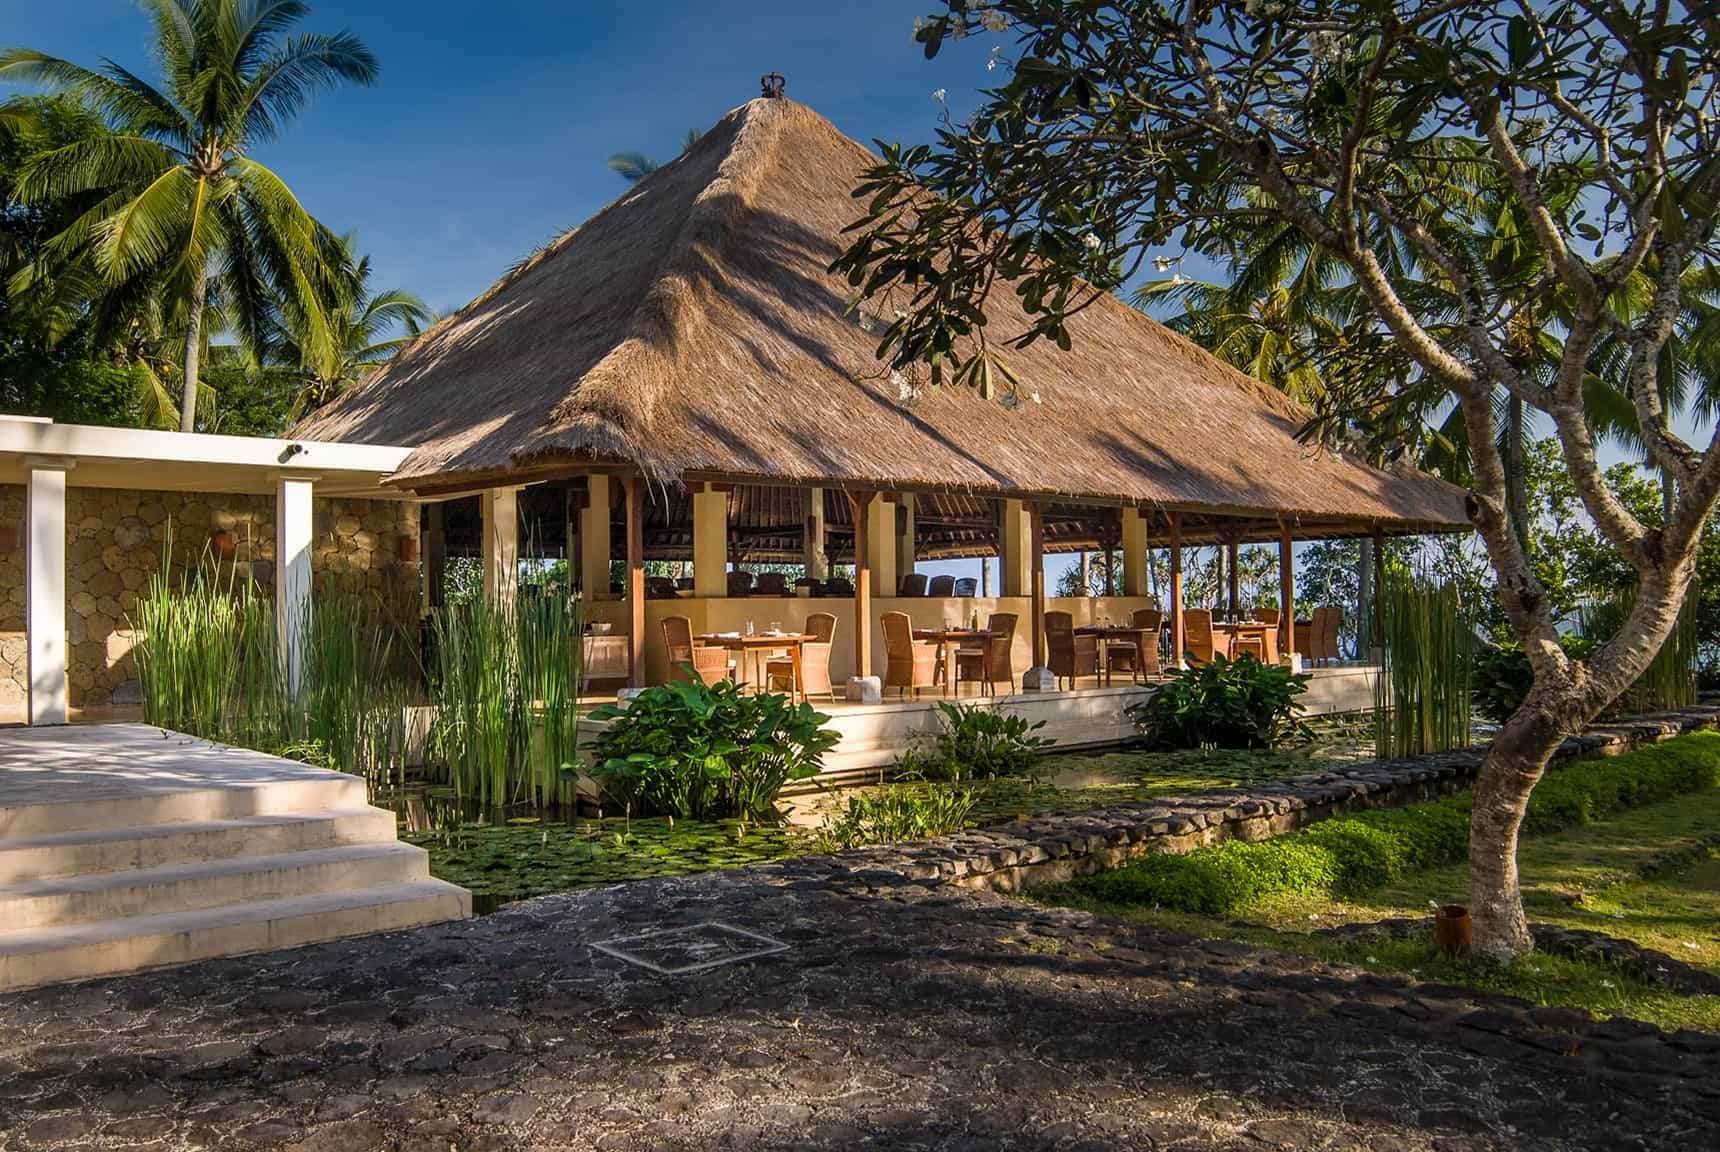 Alila Hotels and Resorts - Manggis, Bali Indonesia (Bali hotel photography by master photographer Rick Carmichael of LuxViz)